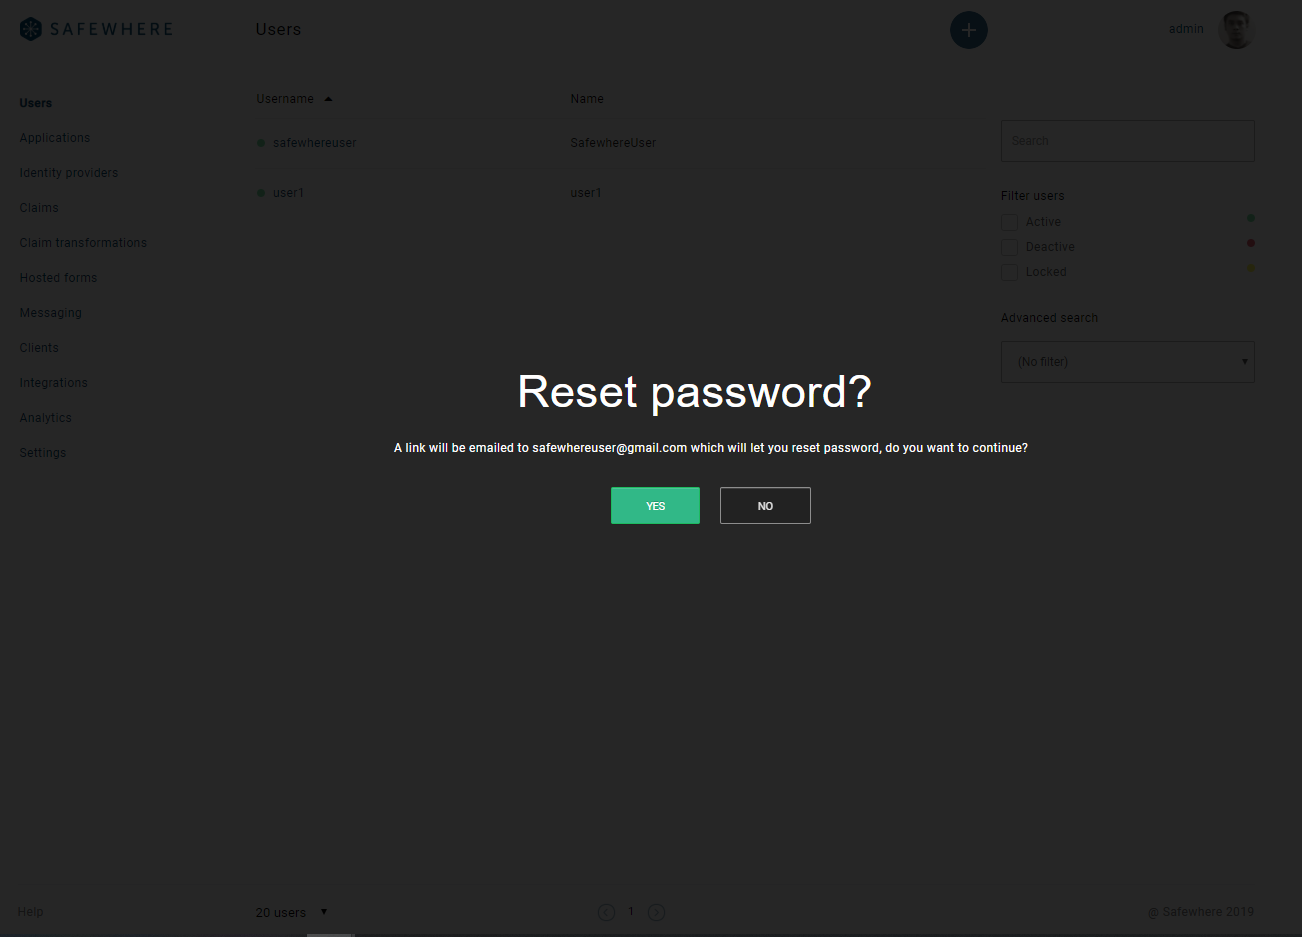 Send reset password link dialog